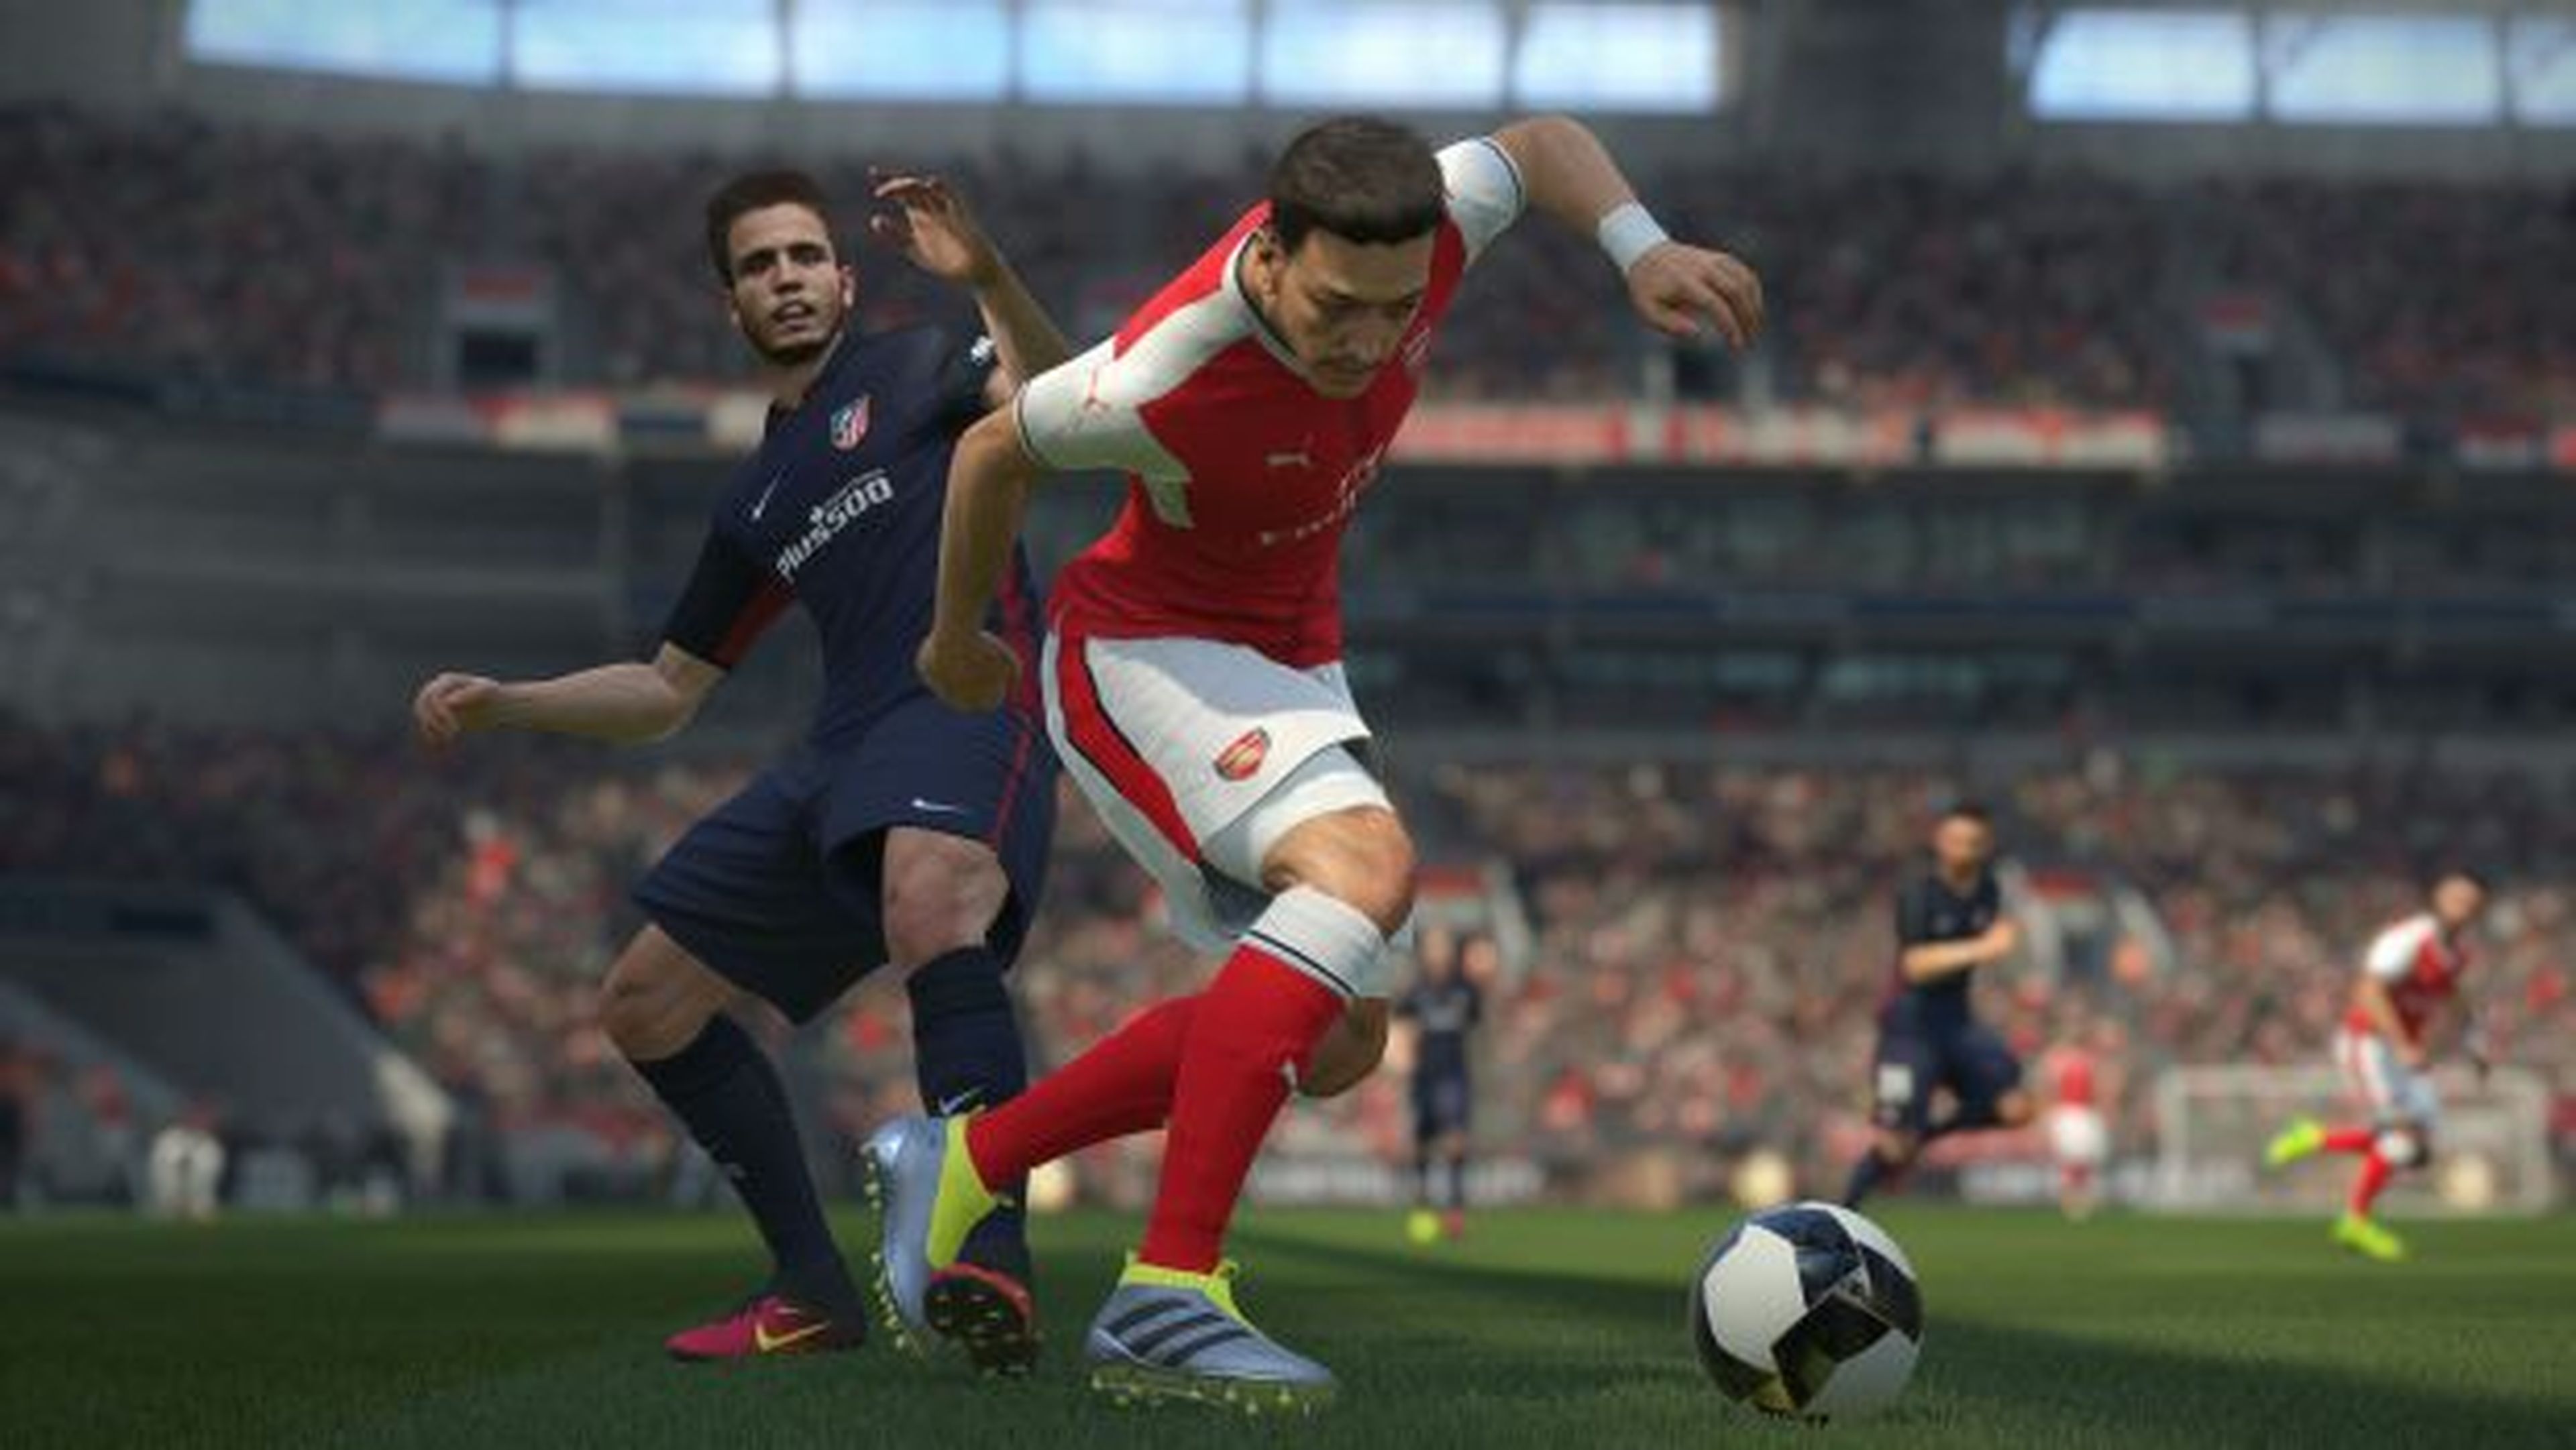 Comprar FIFA 18 o PES 2018, ¿cuál es mejor?